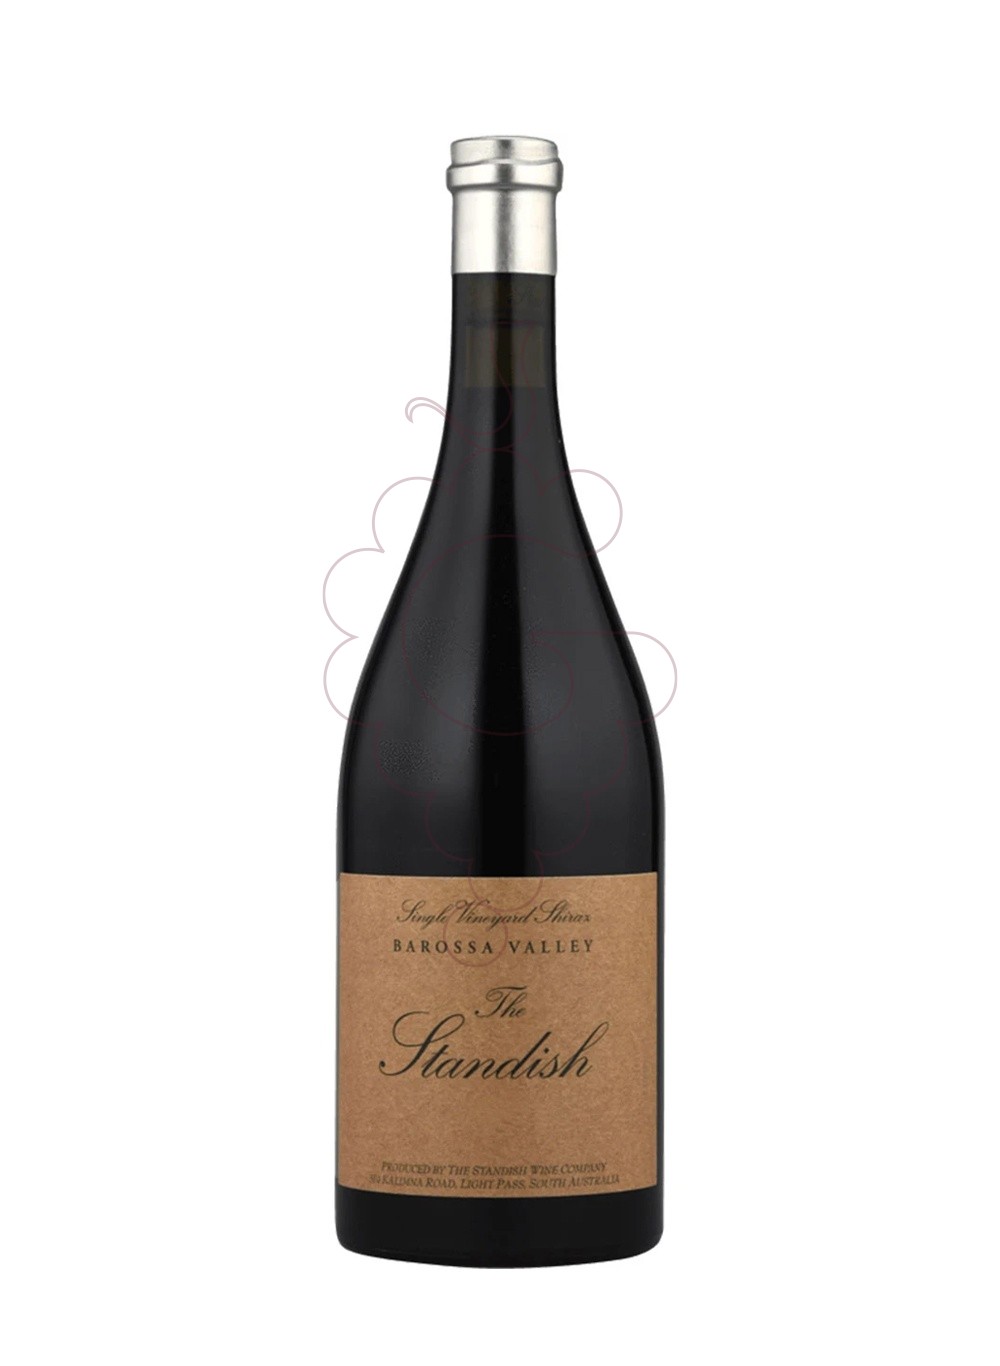 Photo The Standish Barossa Valley red wine